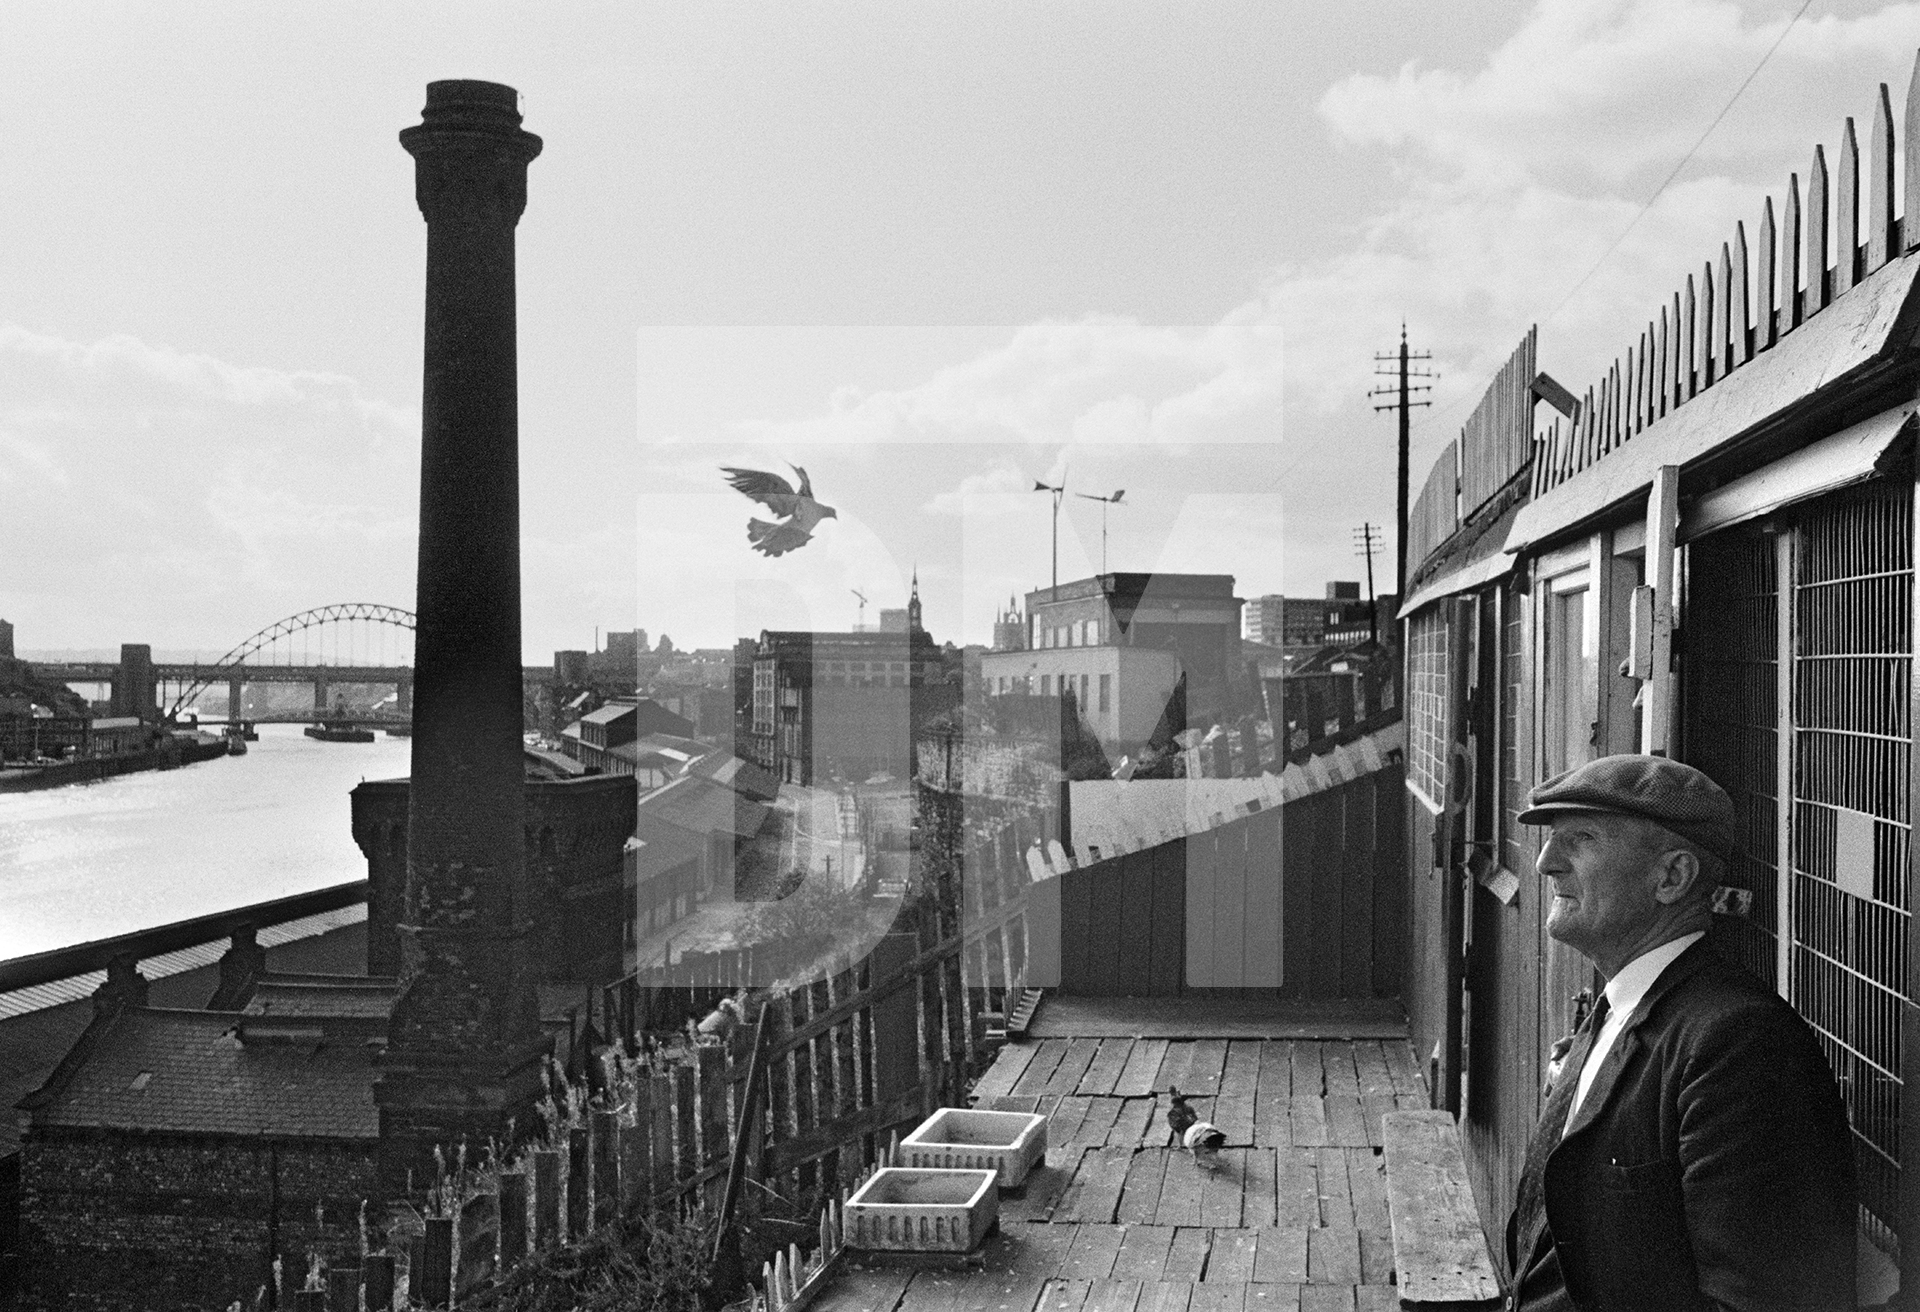 Pigeon cree, Newcastle upon Tyne. September 1974 by Daniel Meadows